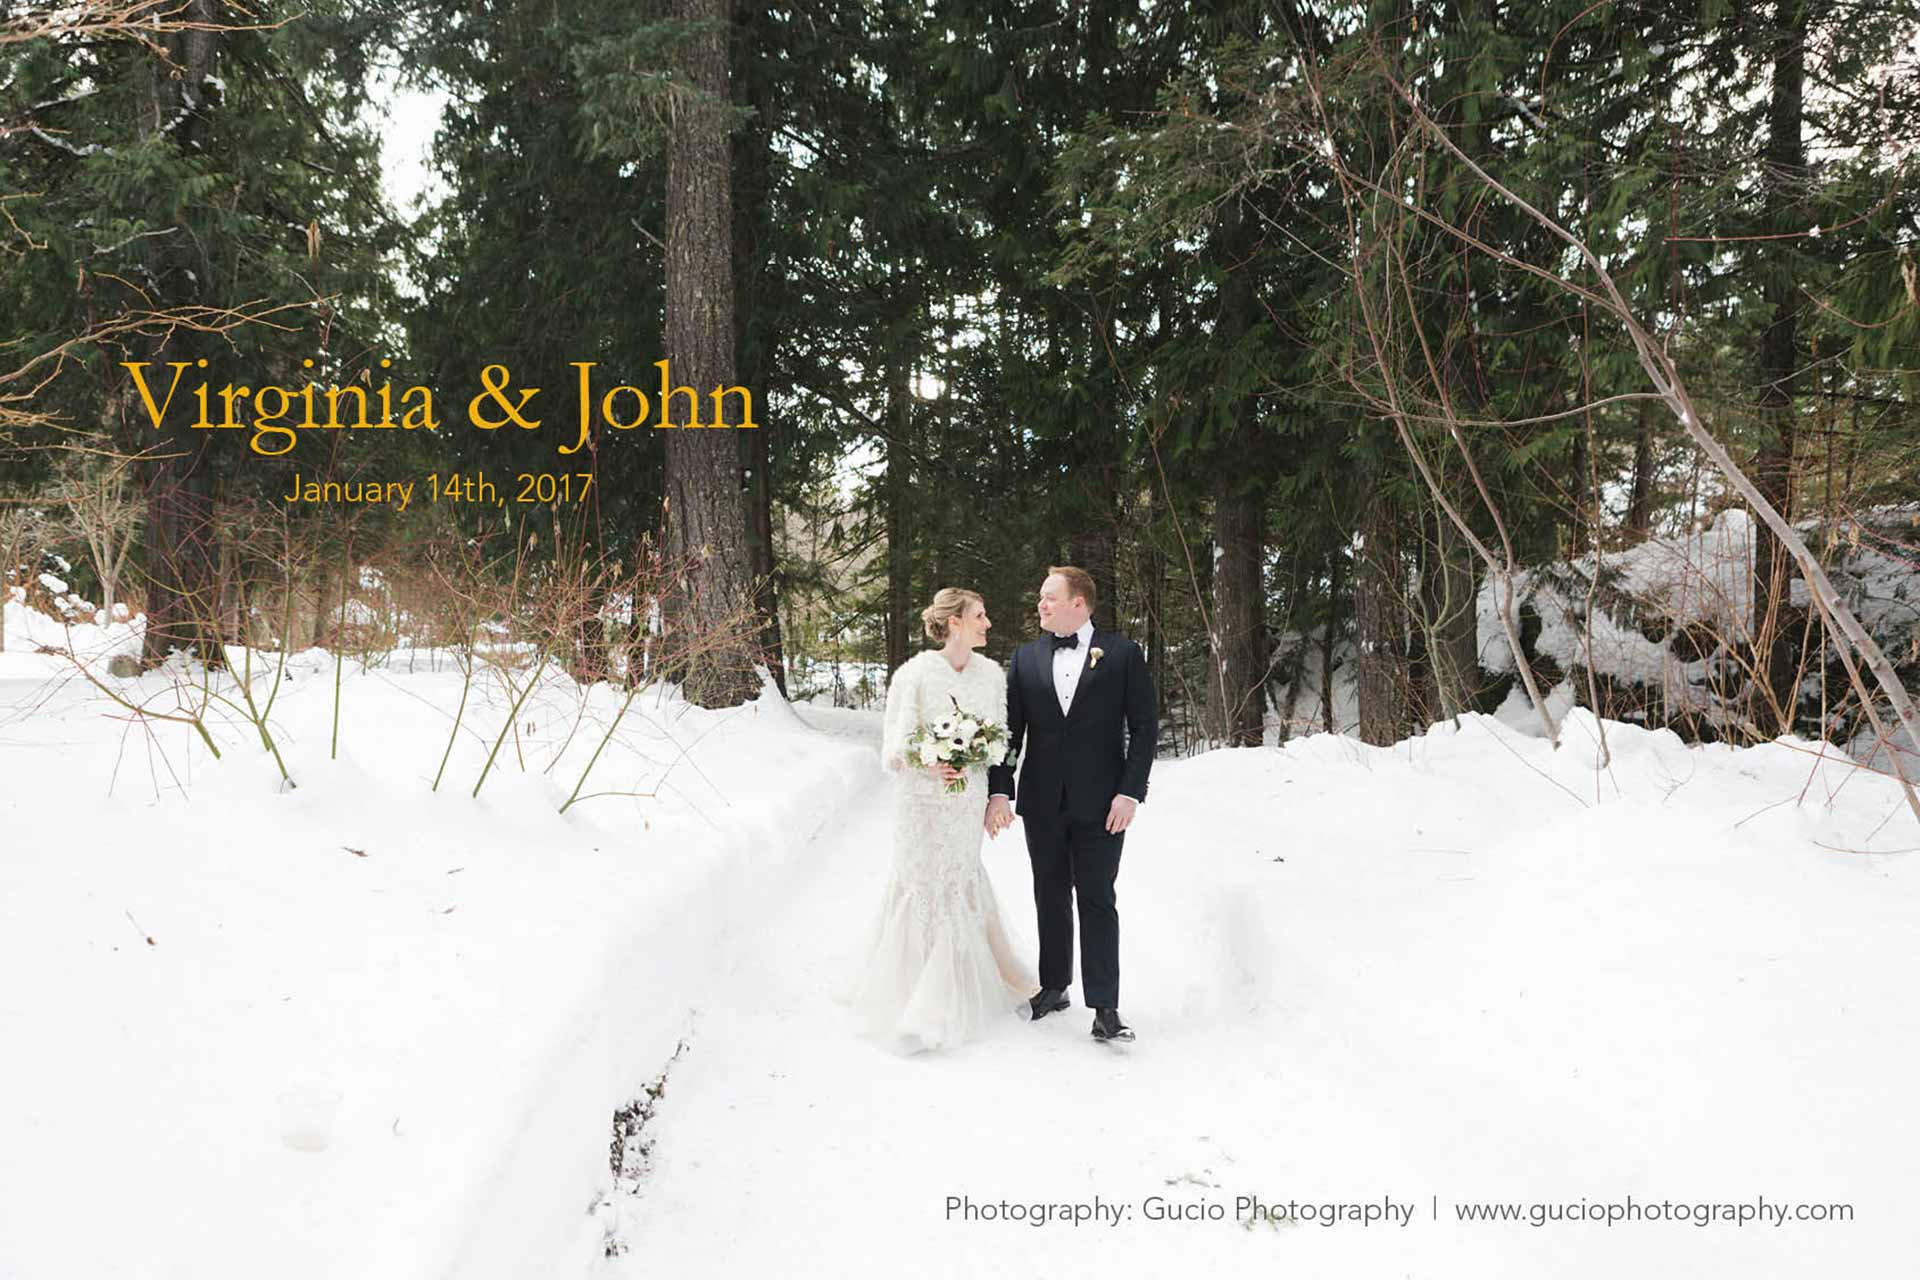 Virginia and John's Wedding